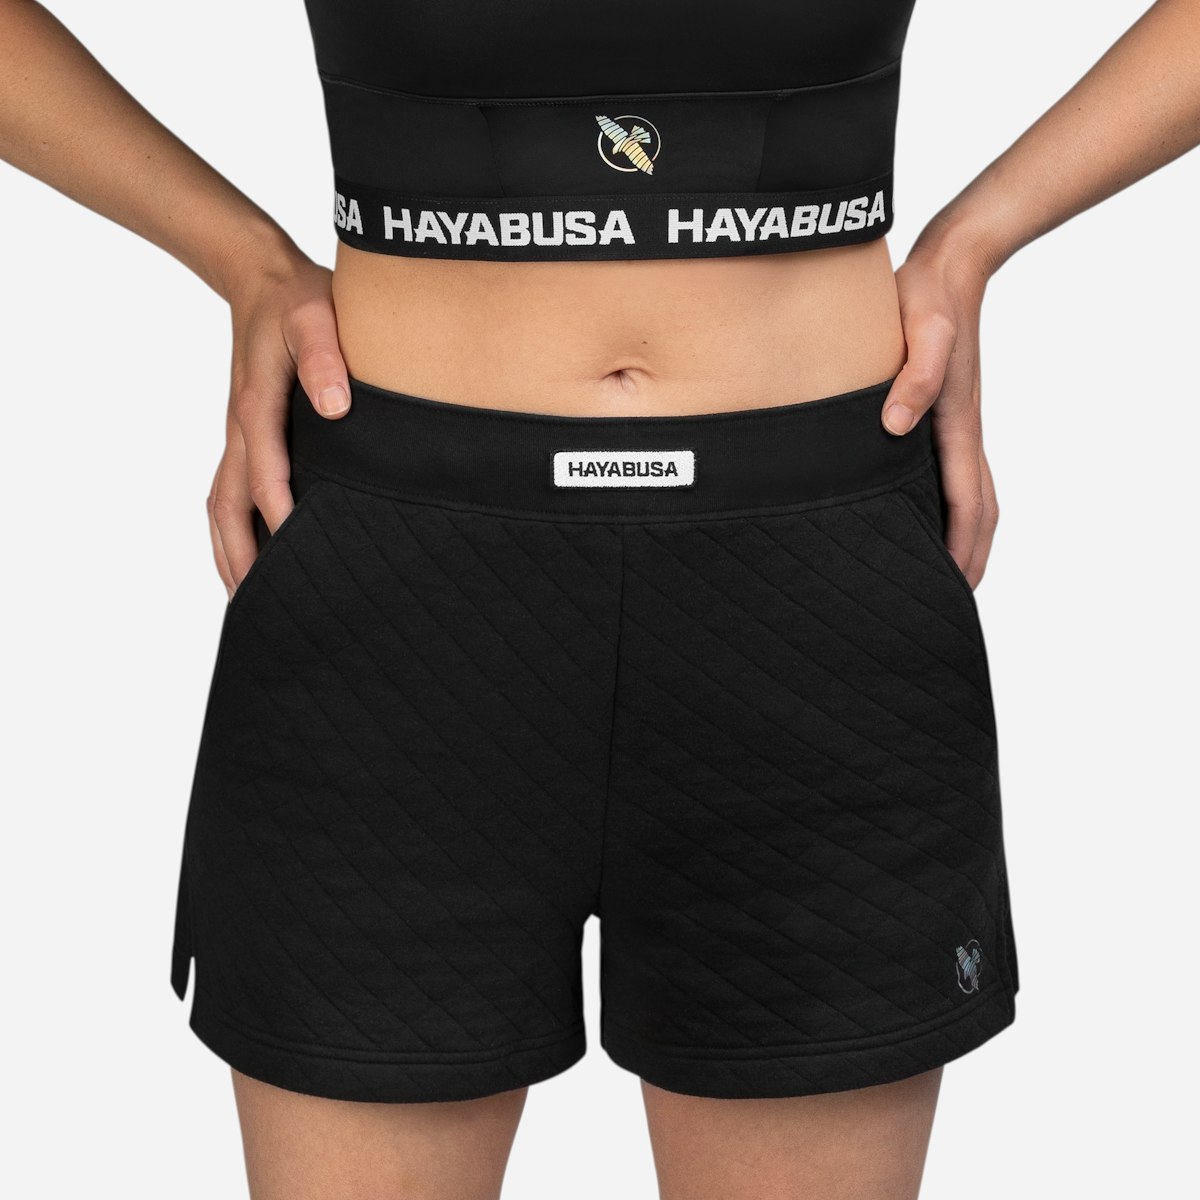 Hayabusa Women's Quilted Training Shorts